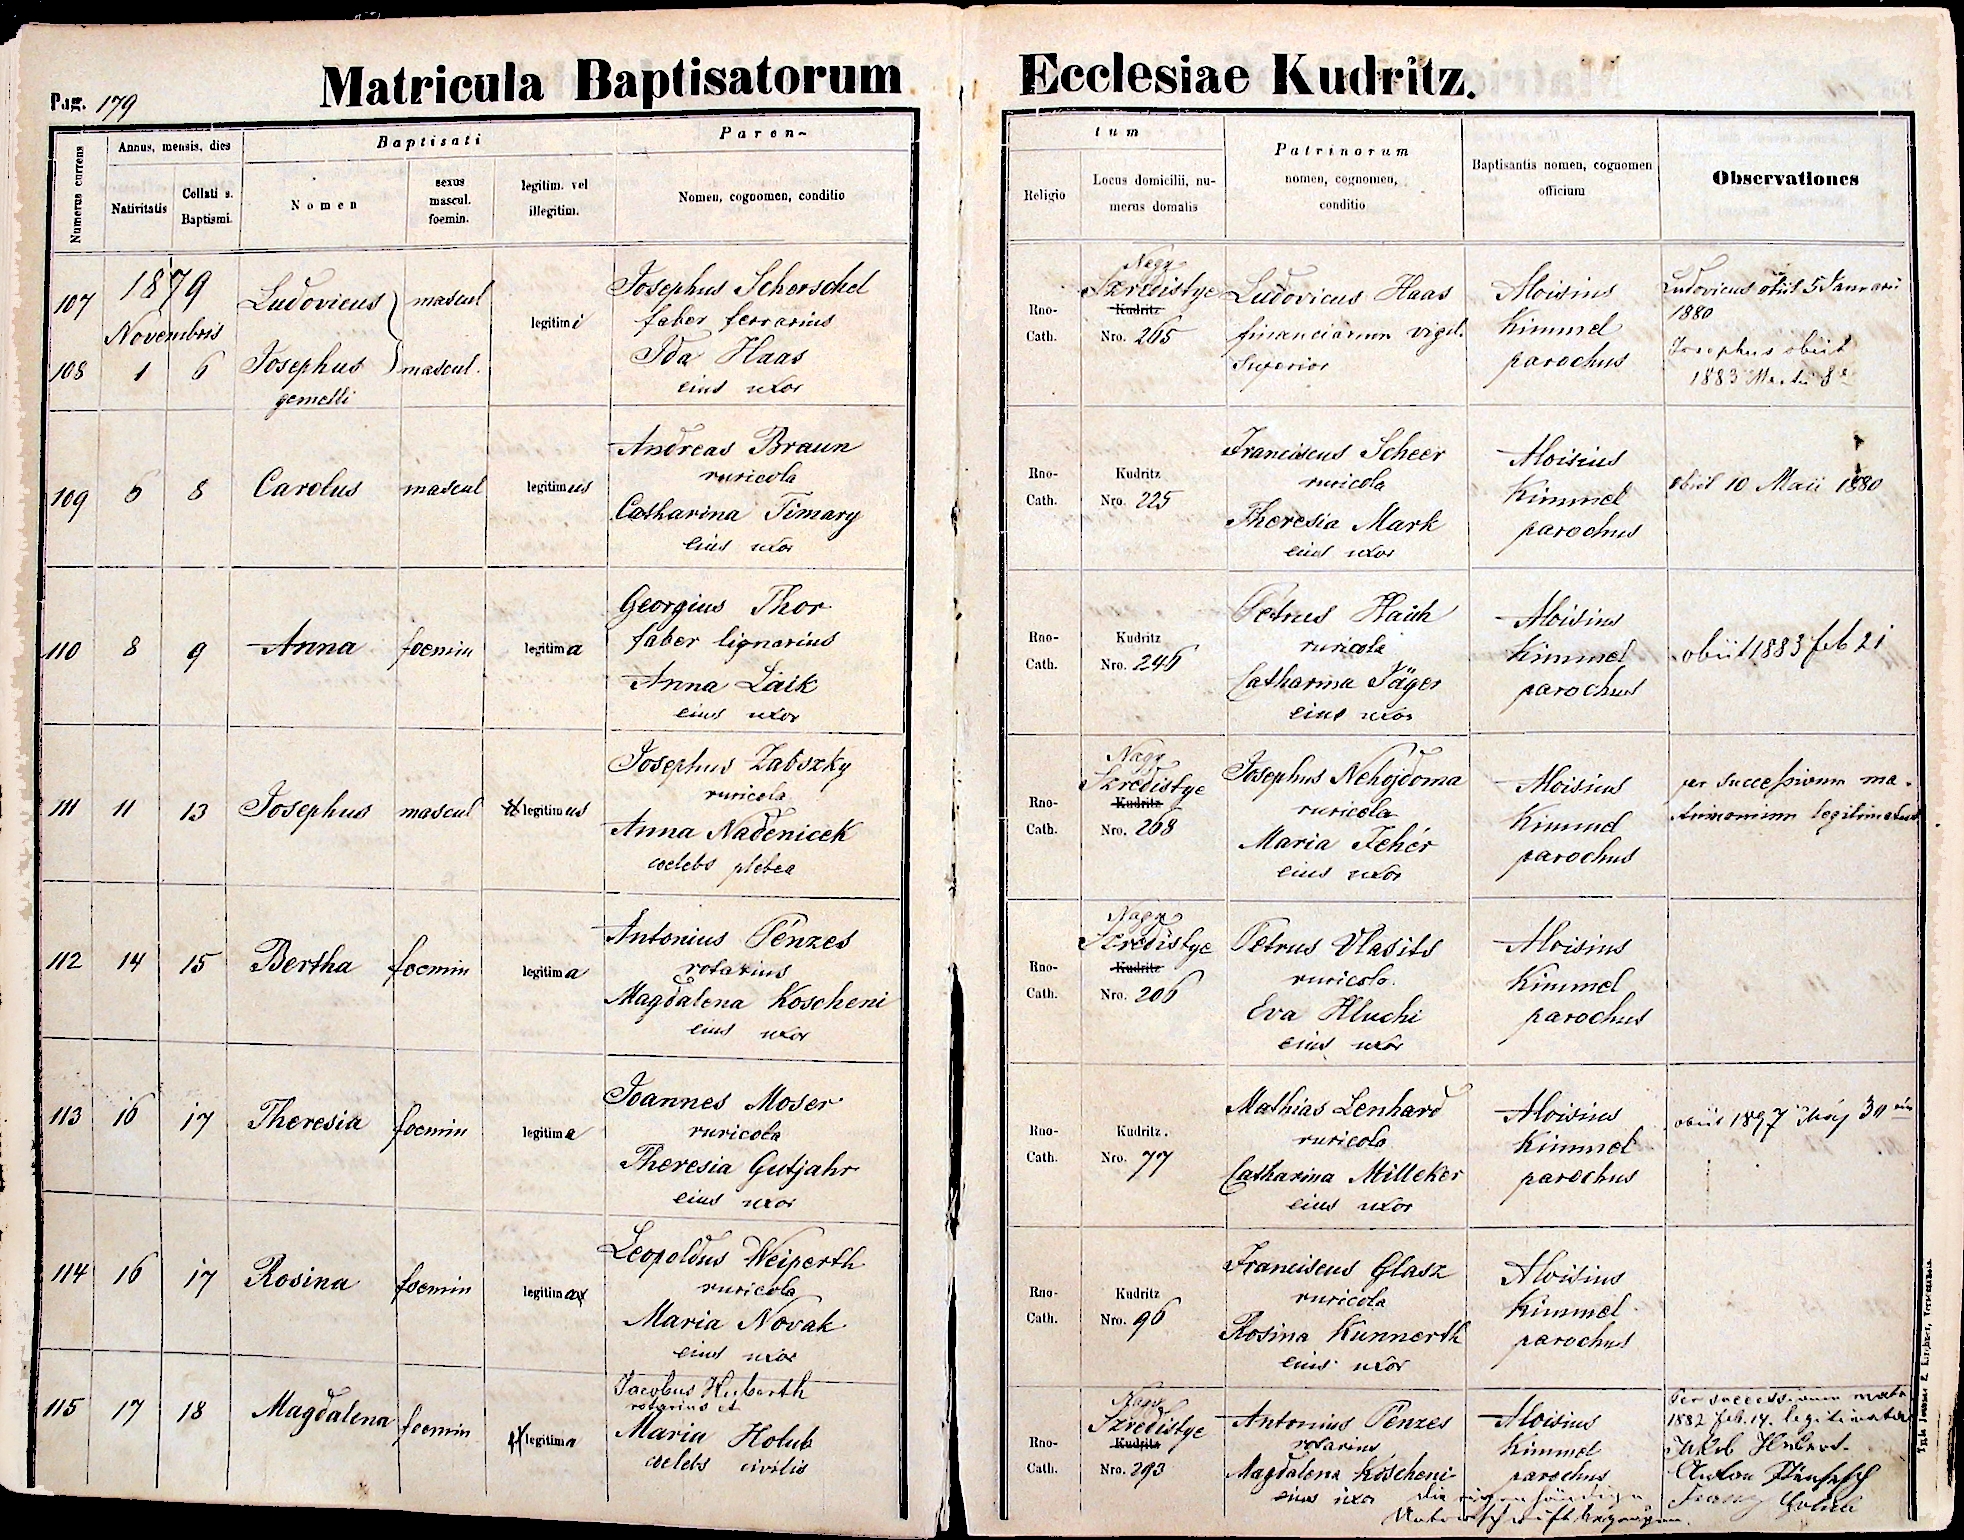 images/church_records/BIRTHS/1870-1879B/1879/179